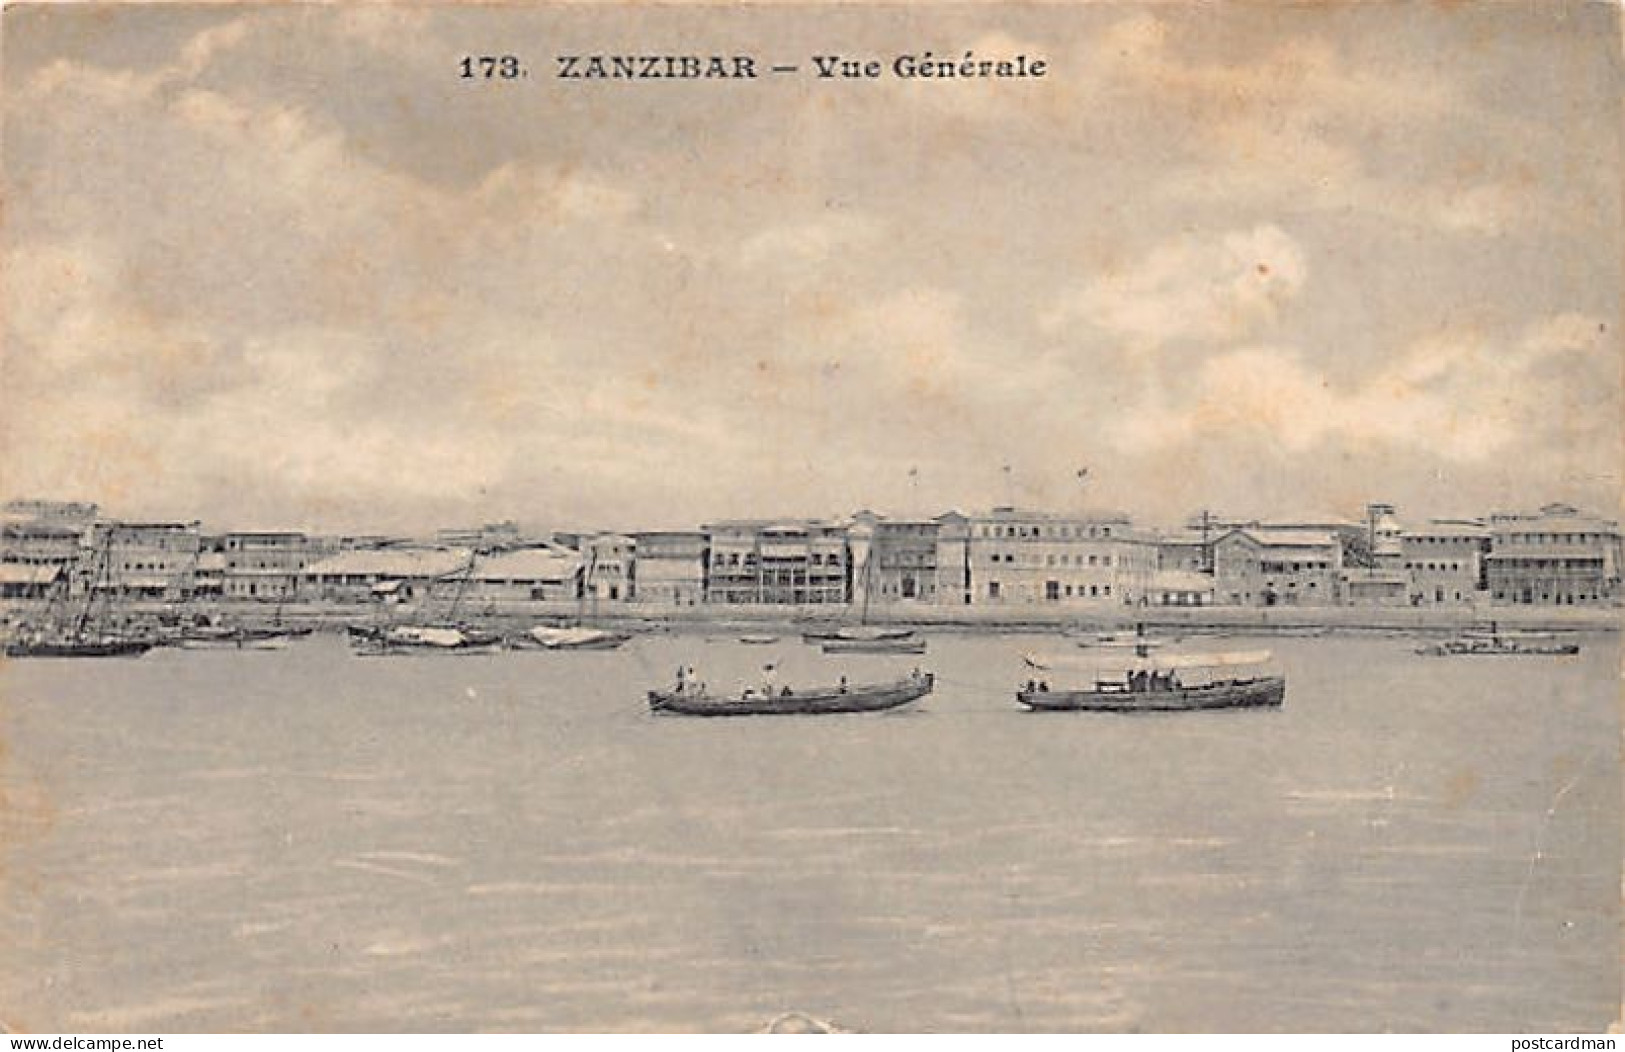 Tanzania - ZANZIBAR - General View From The Sea - Publ. Messageries Maritimes 173 - Tansania